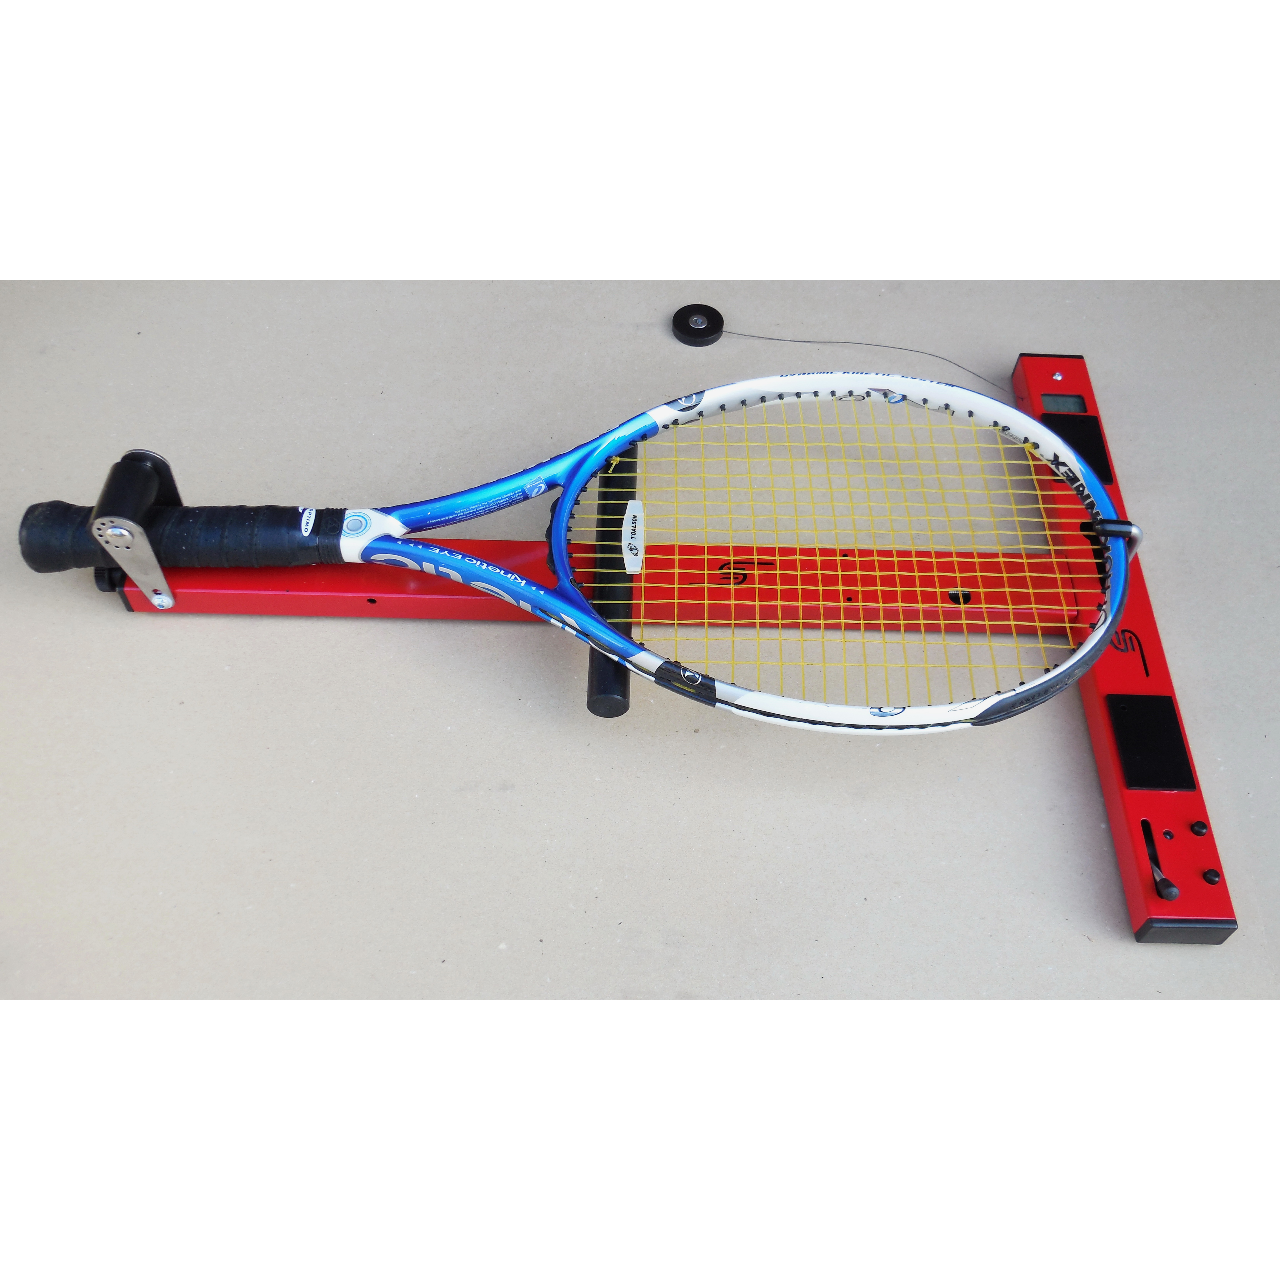 Stringway Stringlab 2 stringbed+racquet test